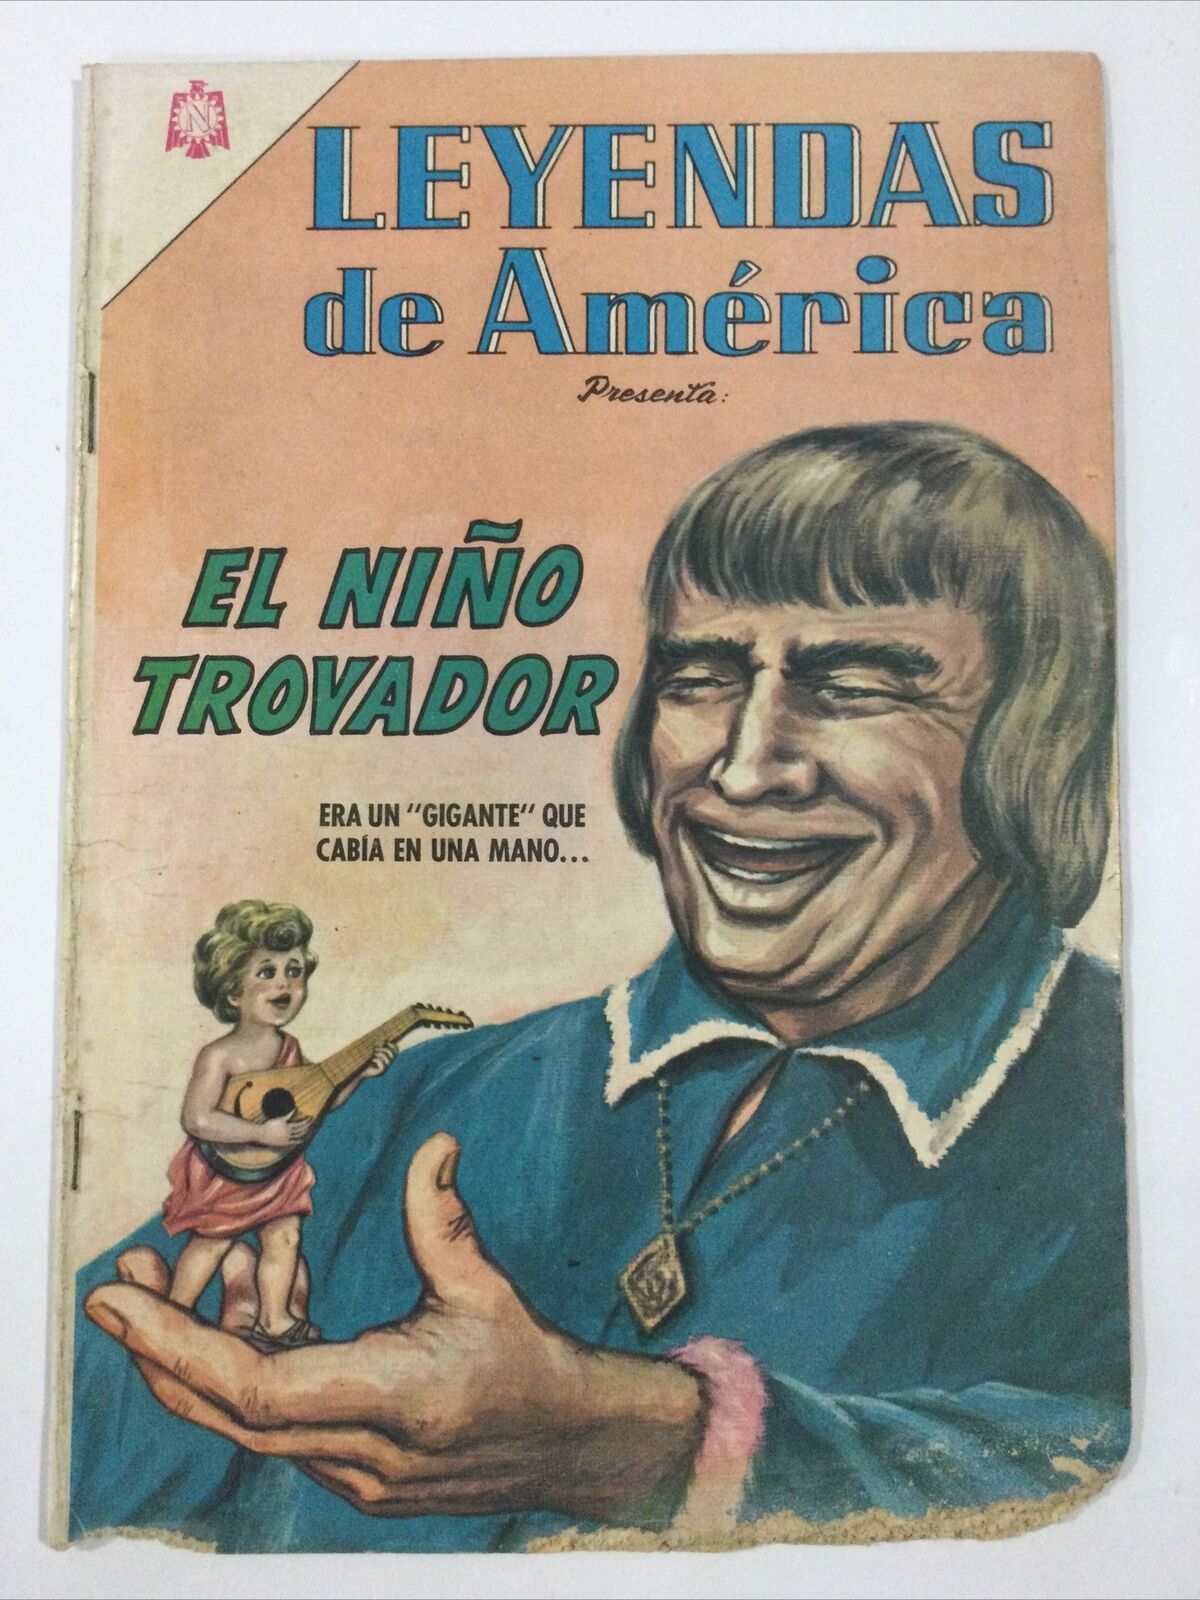 1966 SPANISH COMICS LEYENDAS DE AMERICA #122 EL NINO TROVADOR NOVARO MEXICO